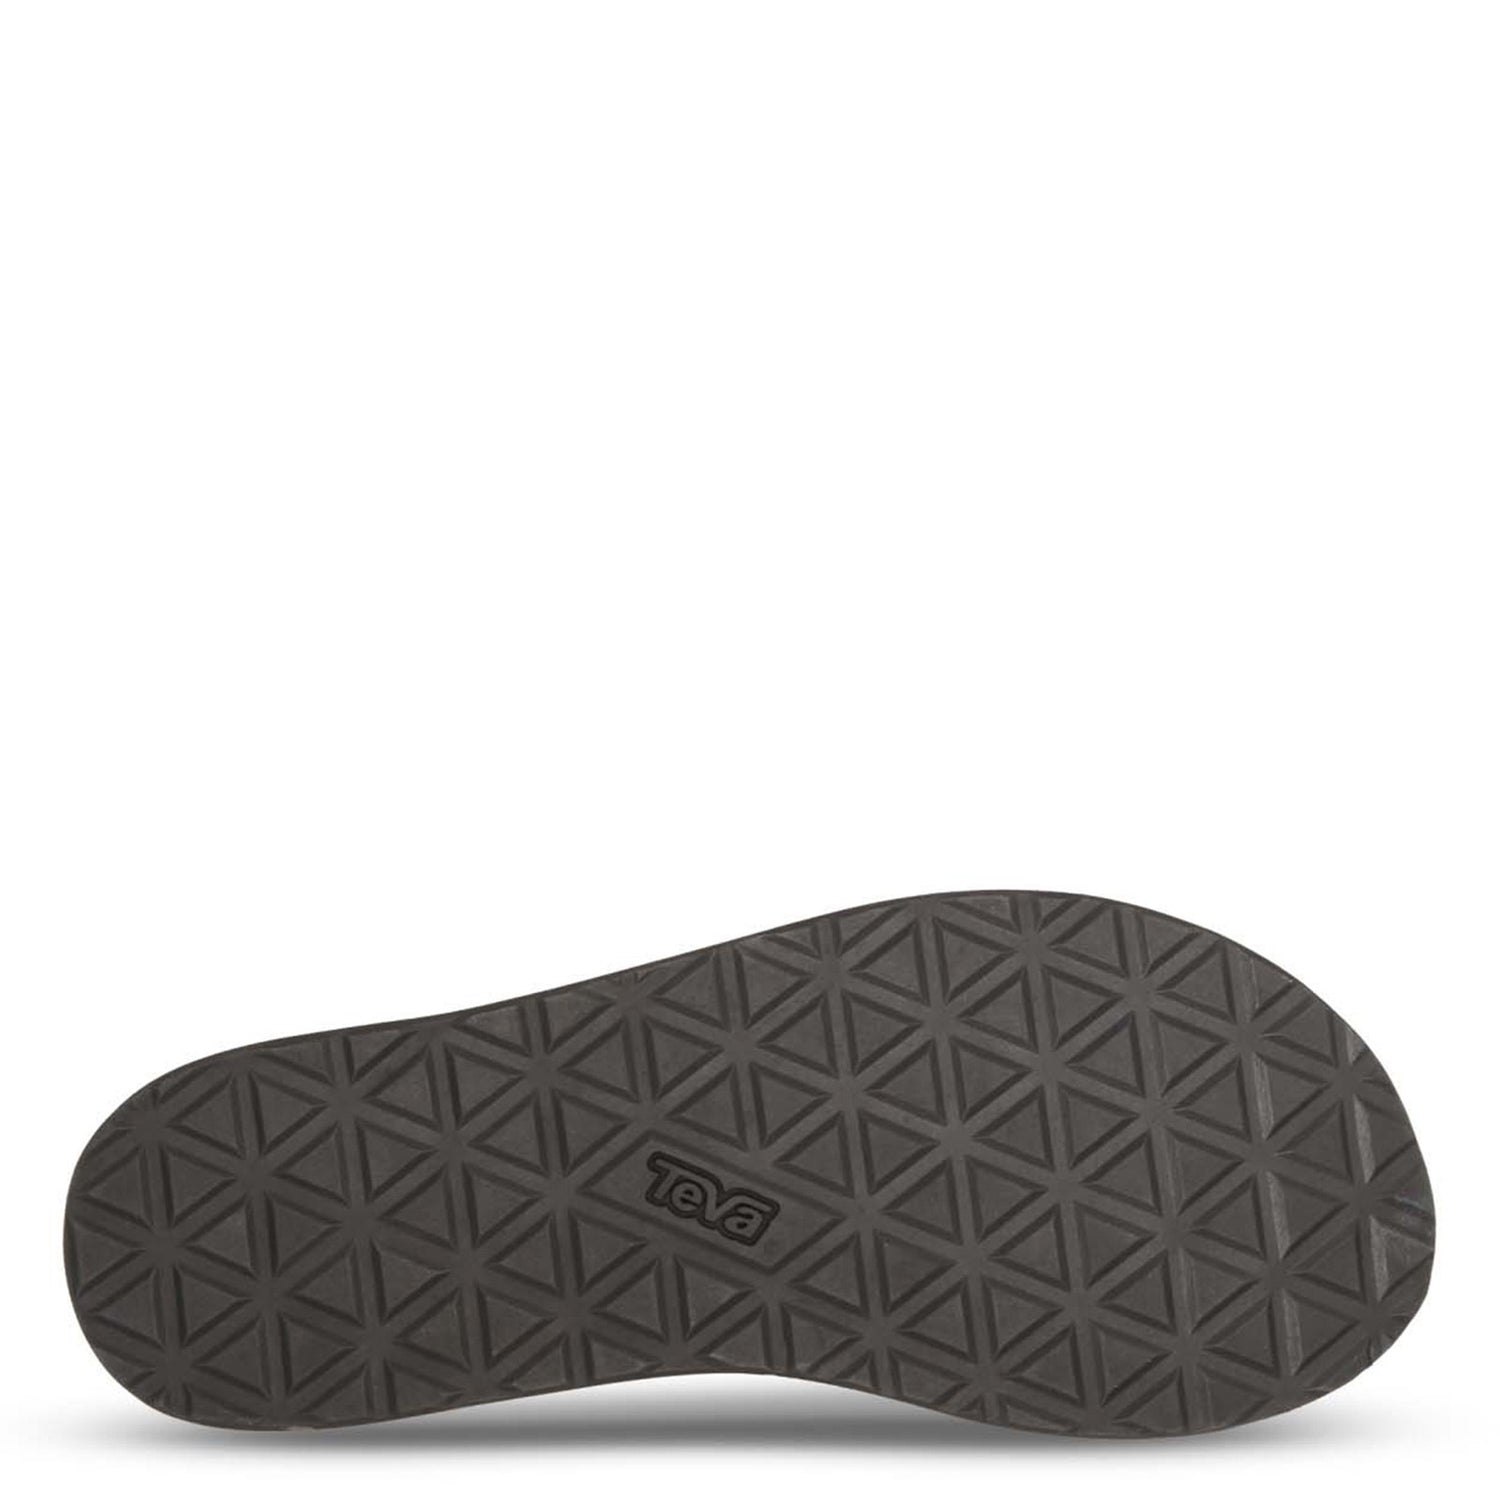 Peltz Shoes  Women's Teva Flatform Universal Sandal BLACK SOLID 1008844-BLK